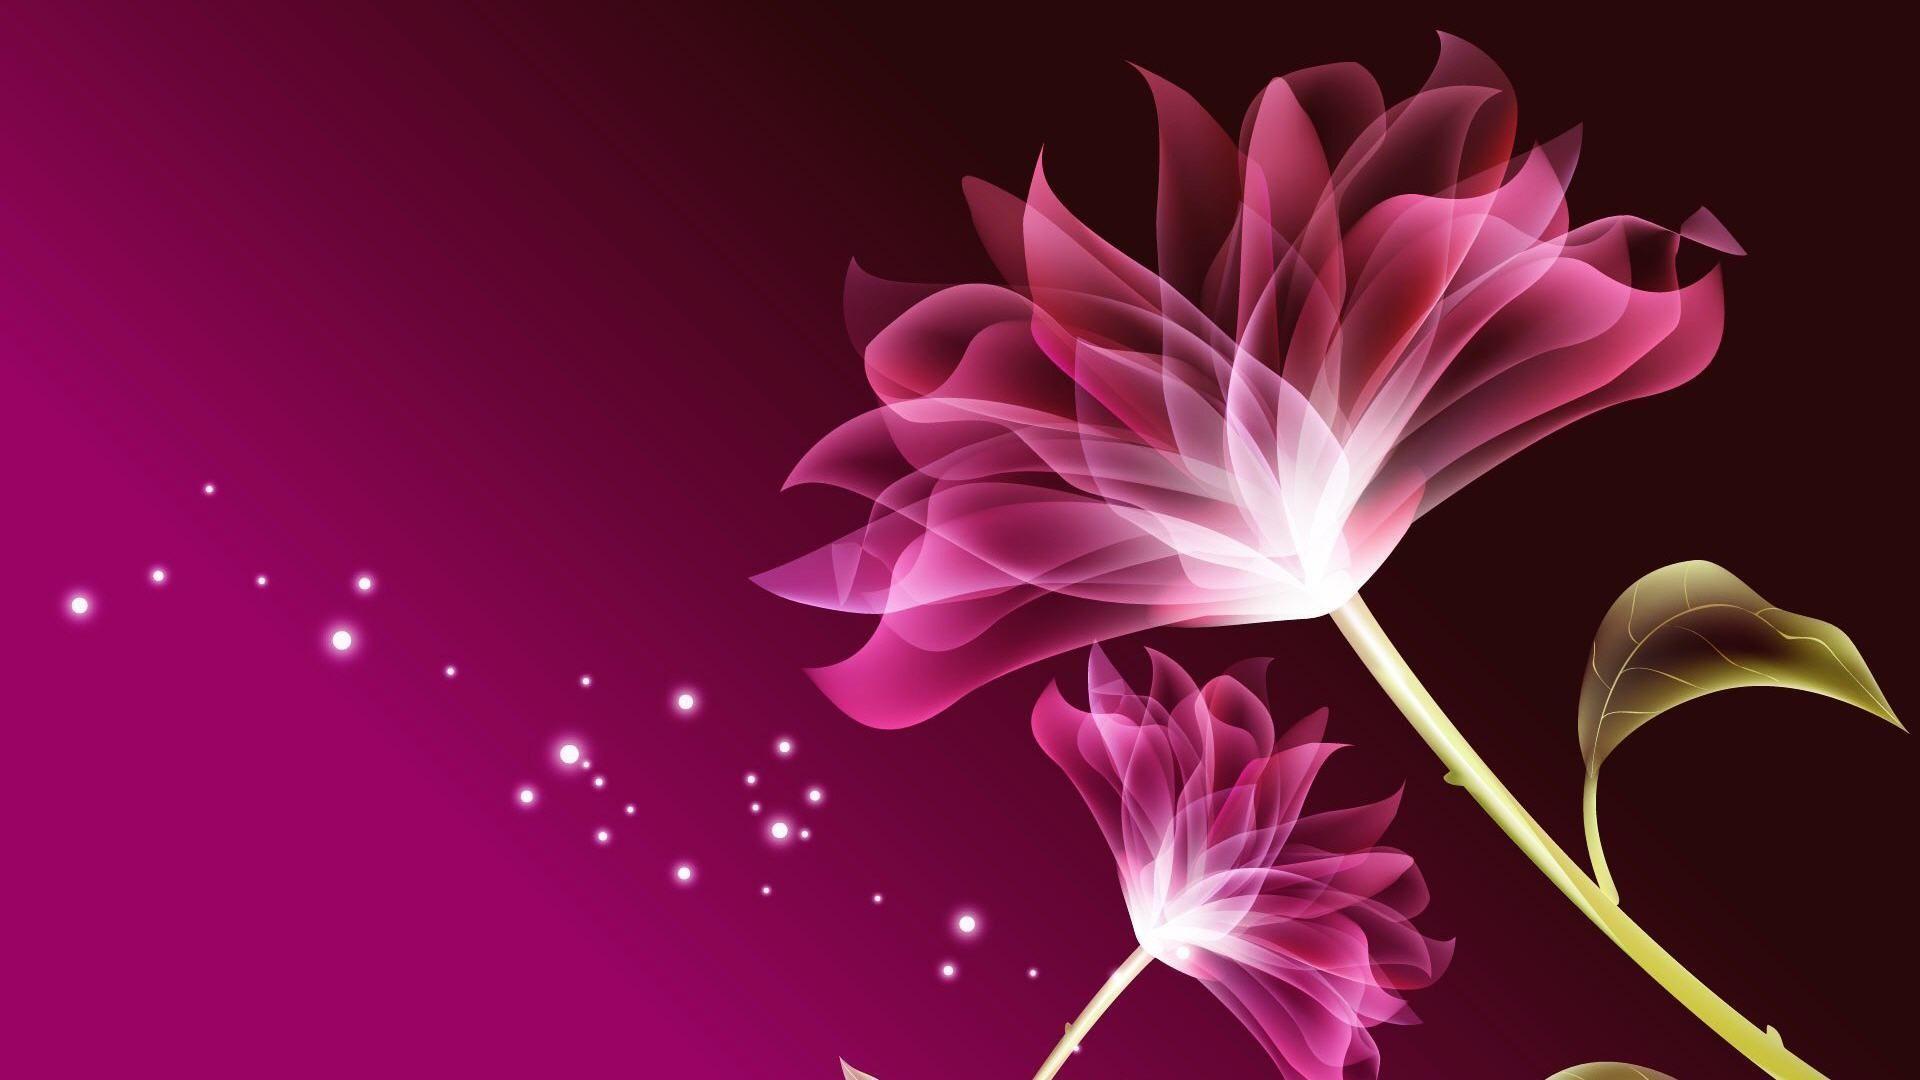 3D Pink Beautiful Flower Wallpaper. pretty flowers